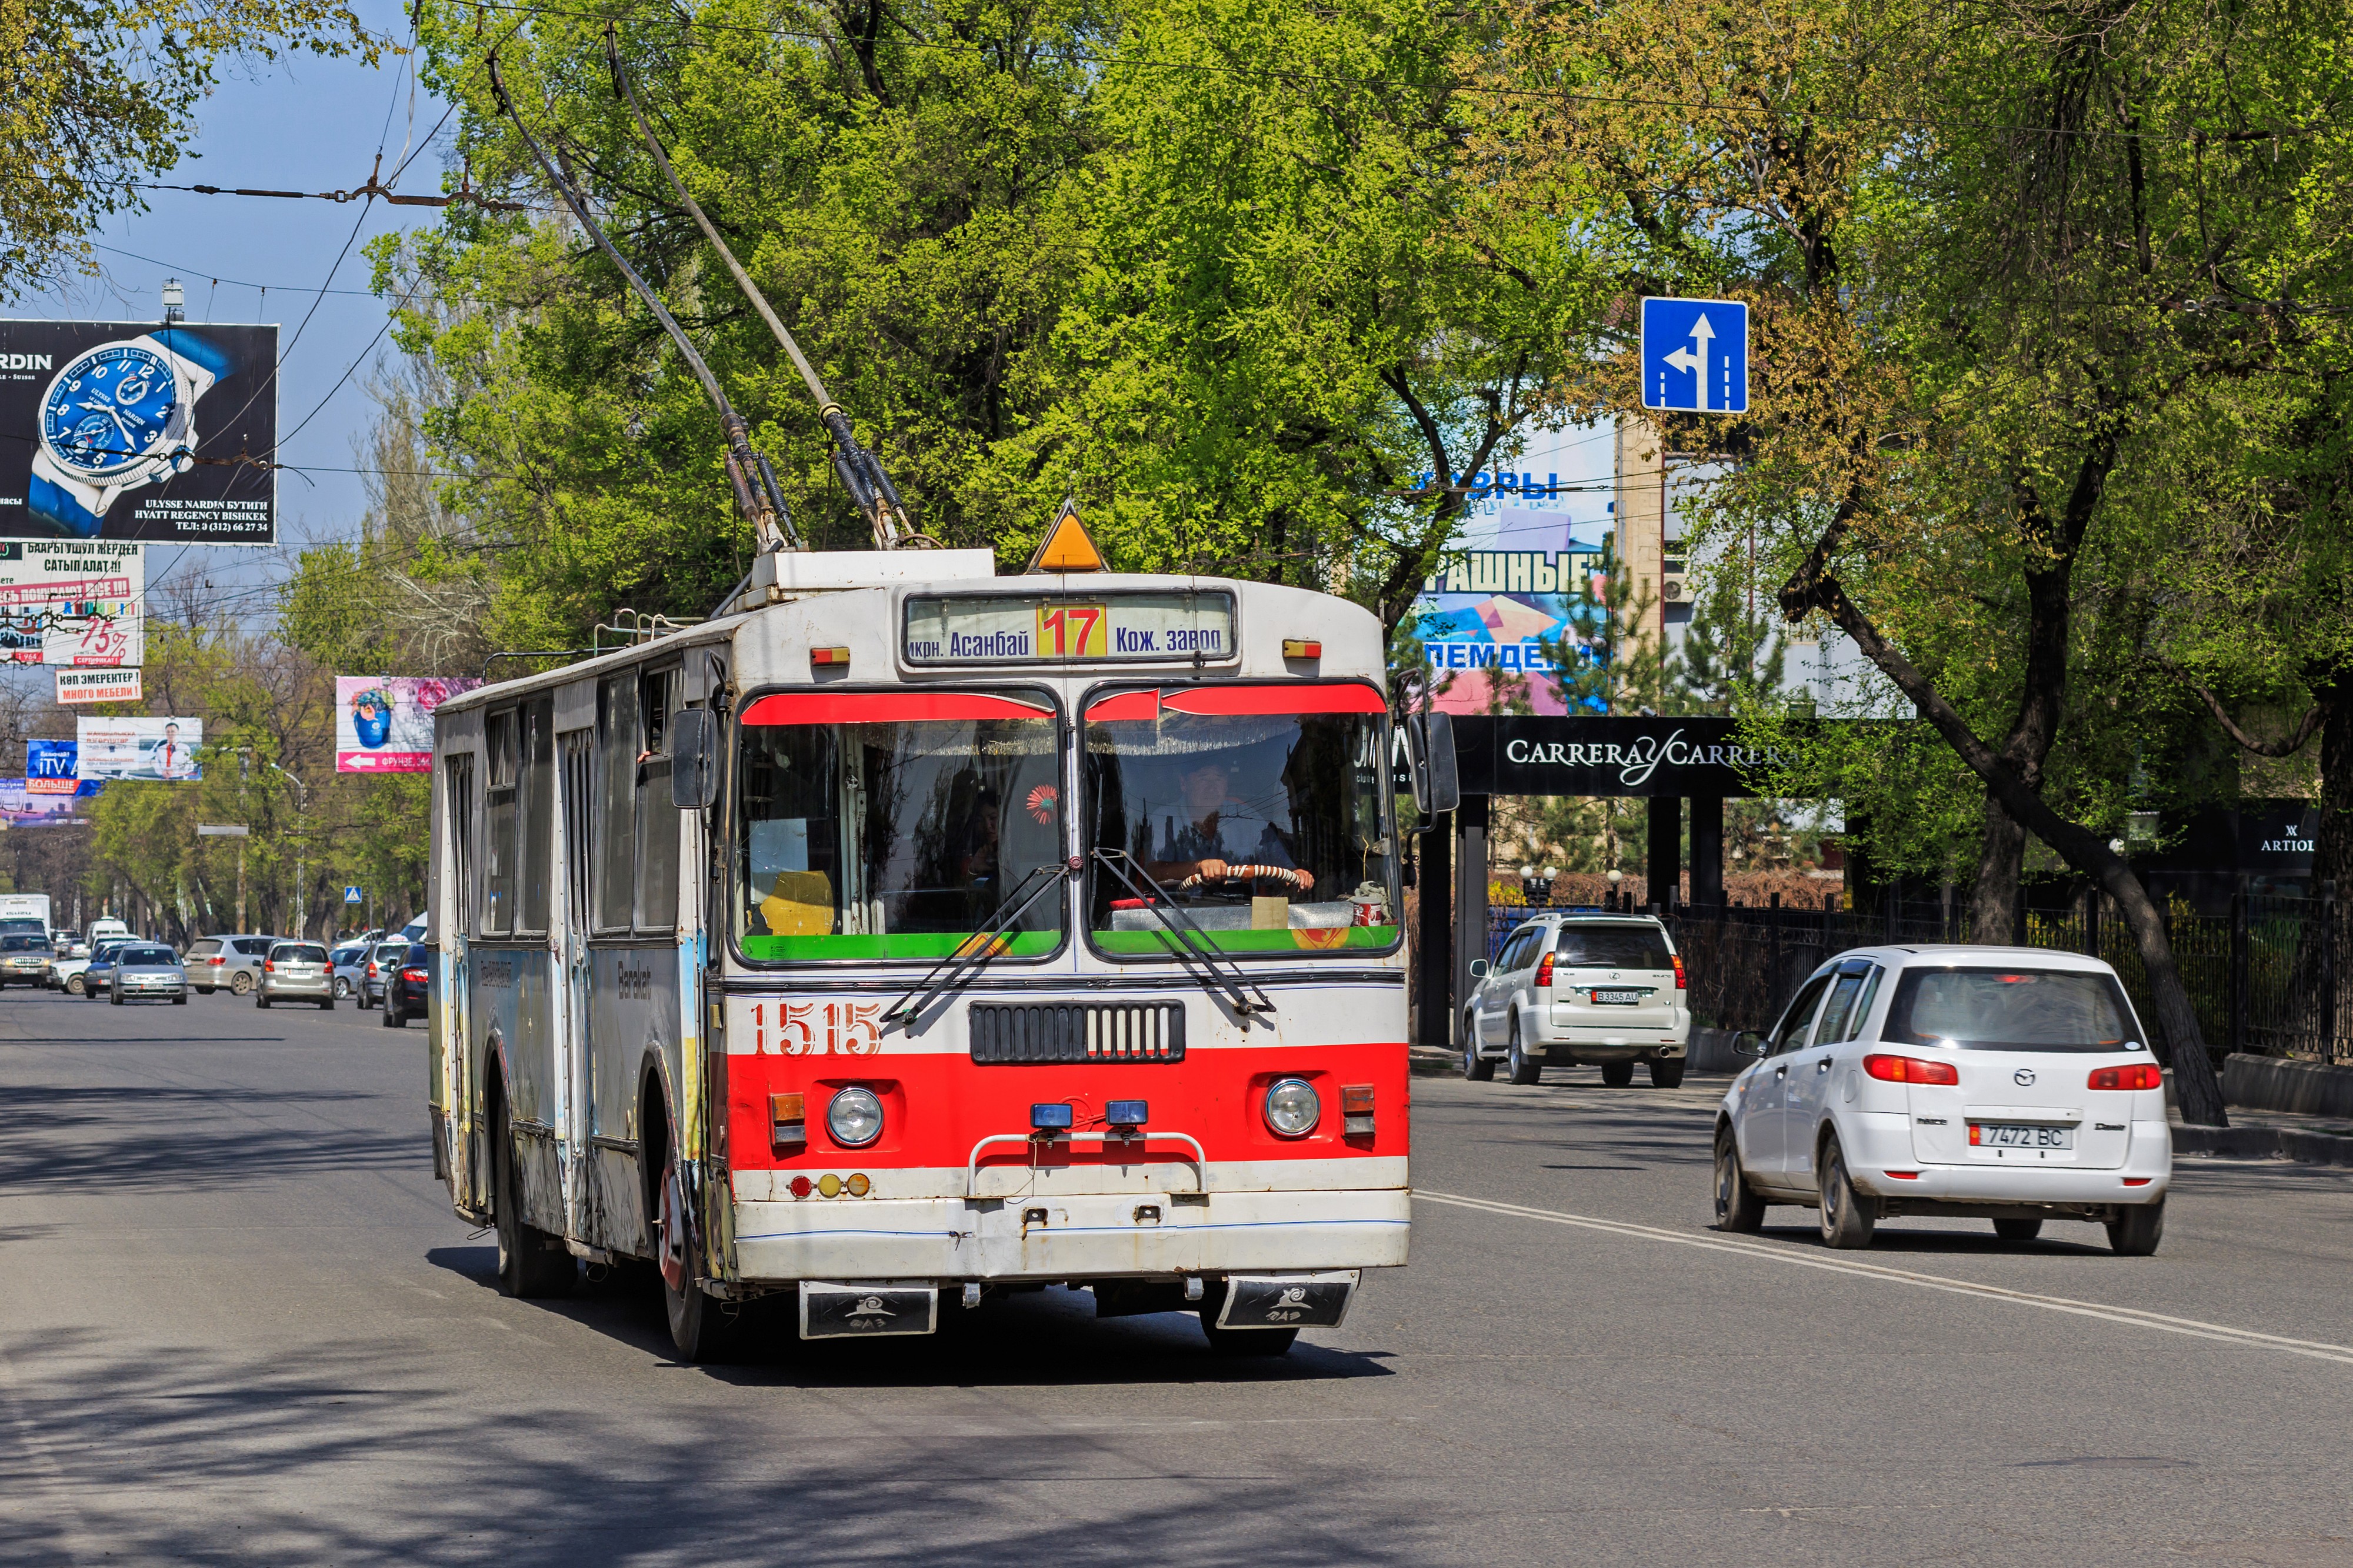 Bishkek 03-2016 img06 trolley at Abdrahmanova Street